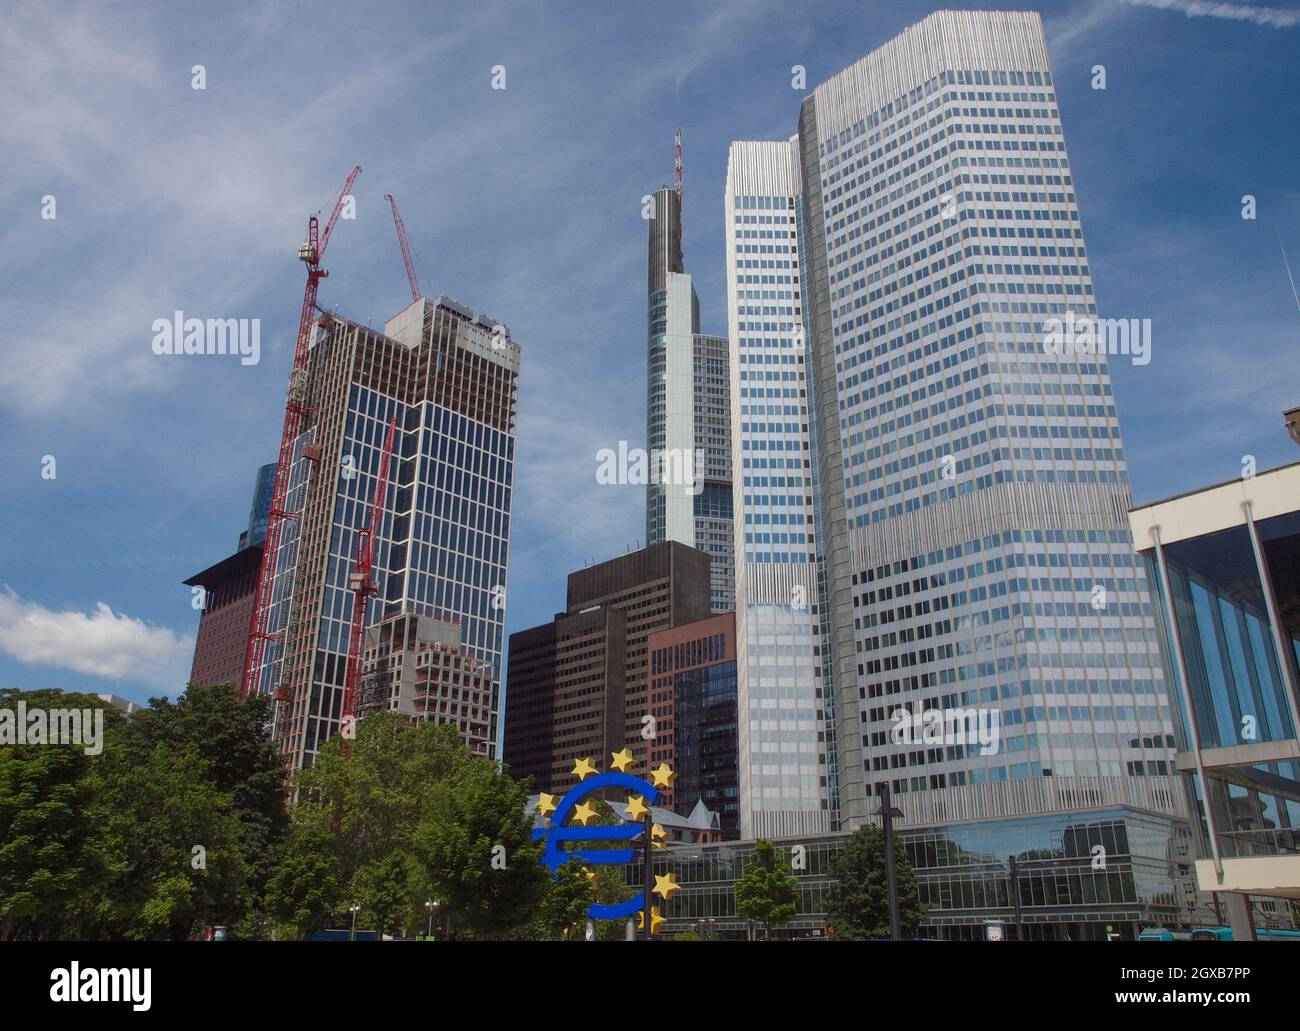 European Central Bank in Frankfurt am Main Germany. Stock Photo